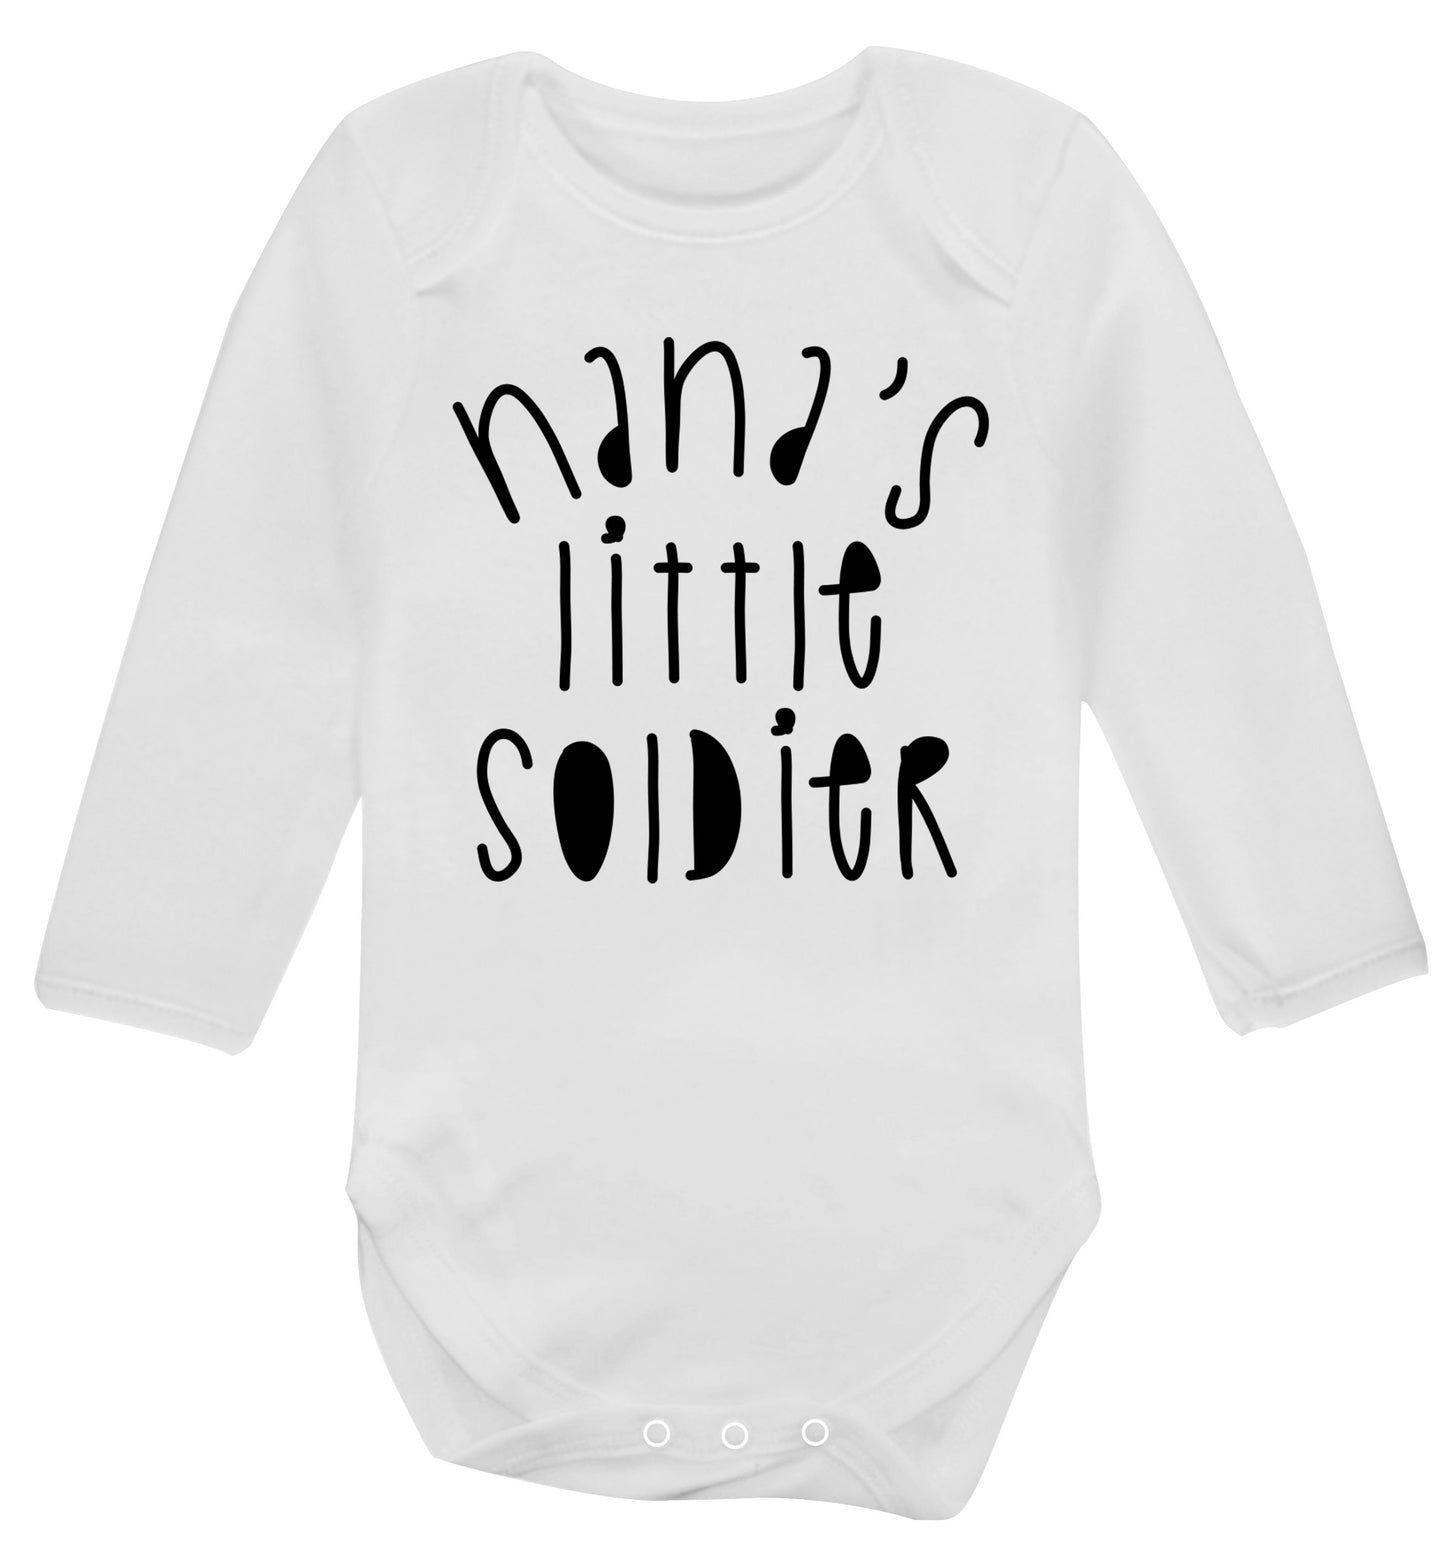 Nana's little soldier Baby Vest long sleeved white 6-12 months